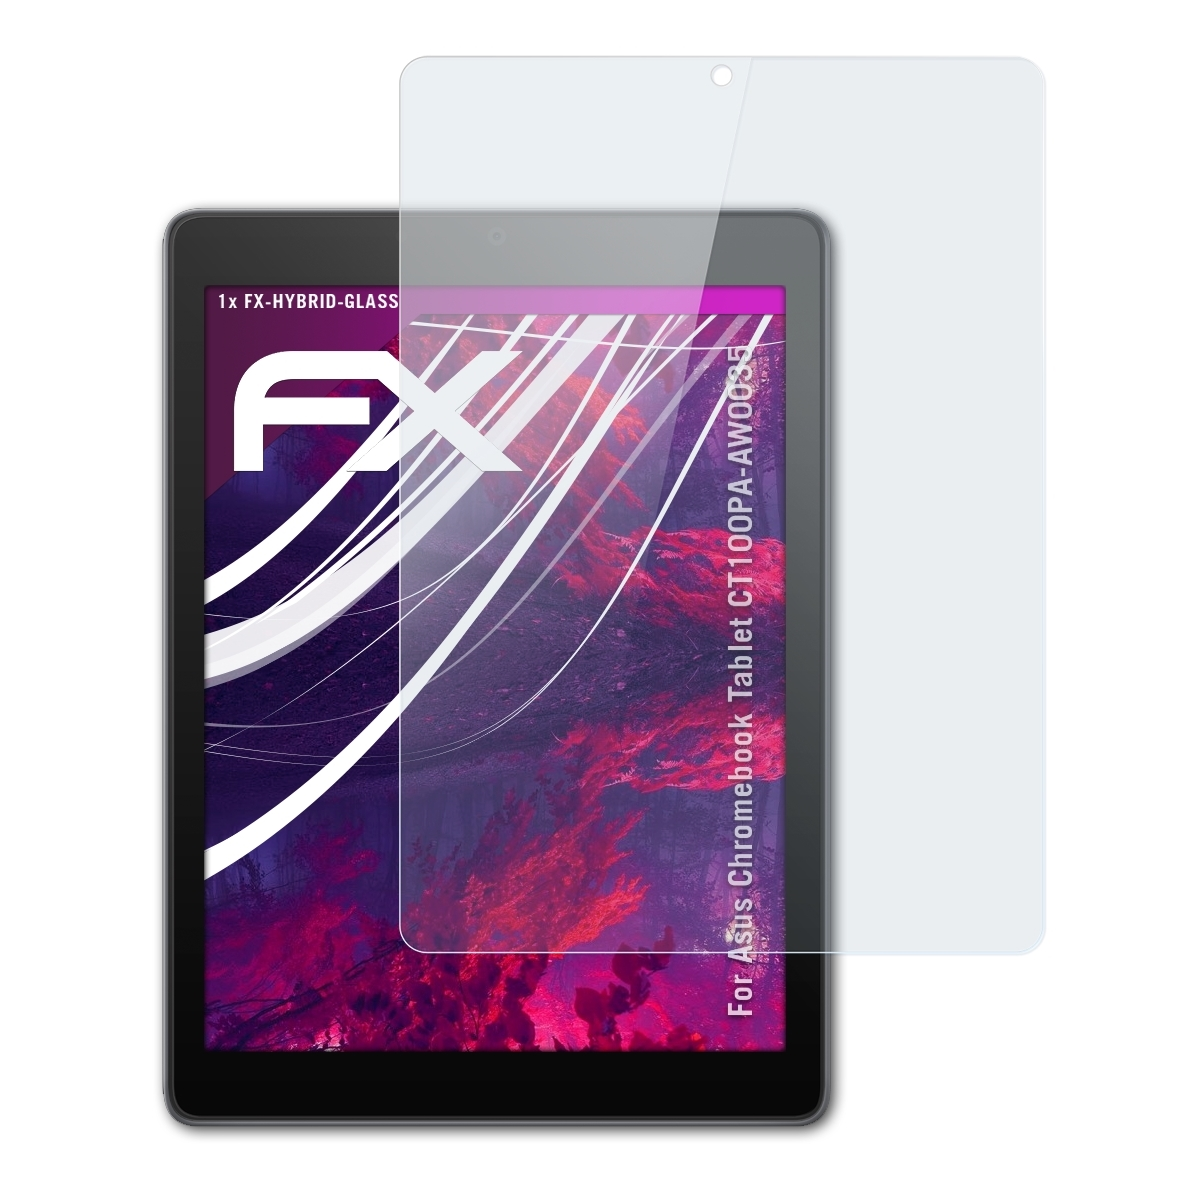 Asus (CT100PA-AW0035)) FX-Hybrid-Glass ATFOLIX Tablet Chromebook Schutzglas(für